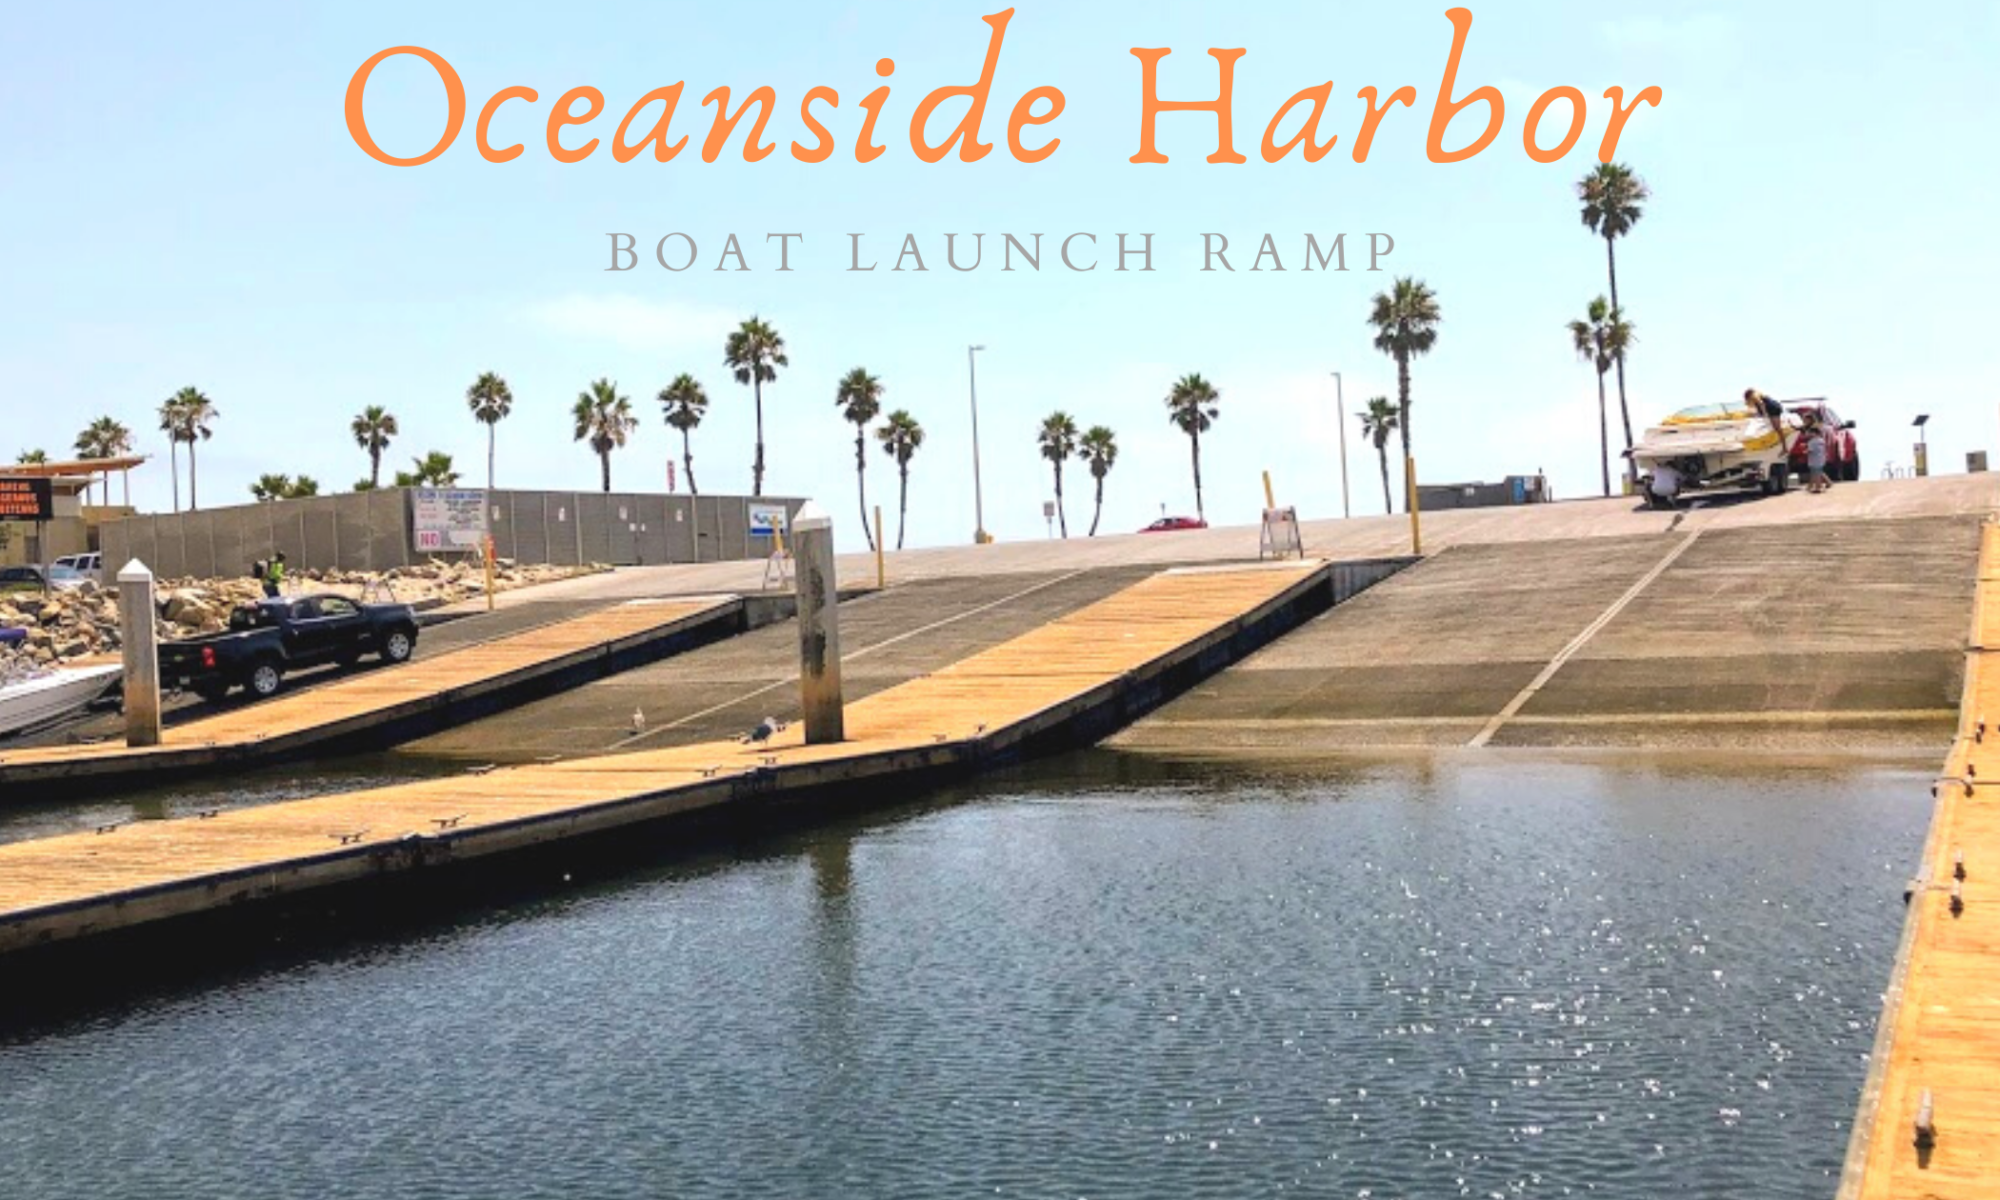 Oceanside Harbor Featured image boat trailer car